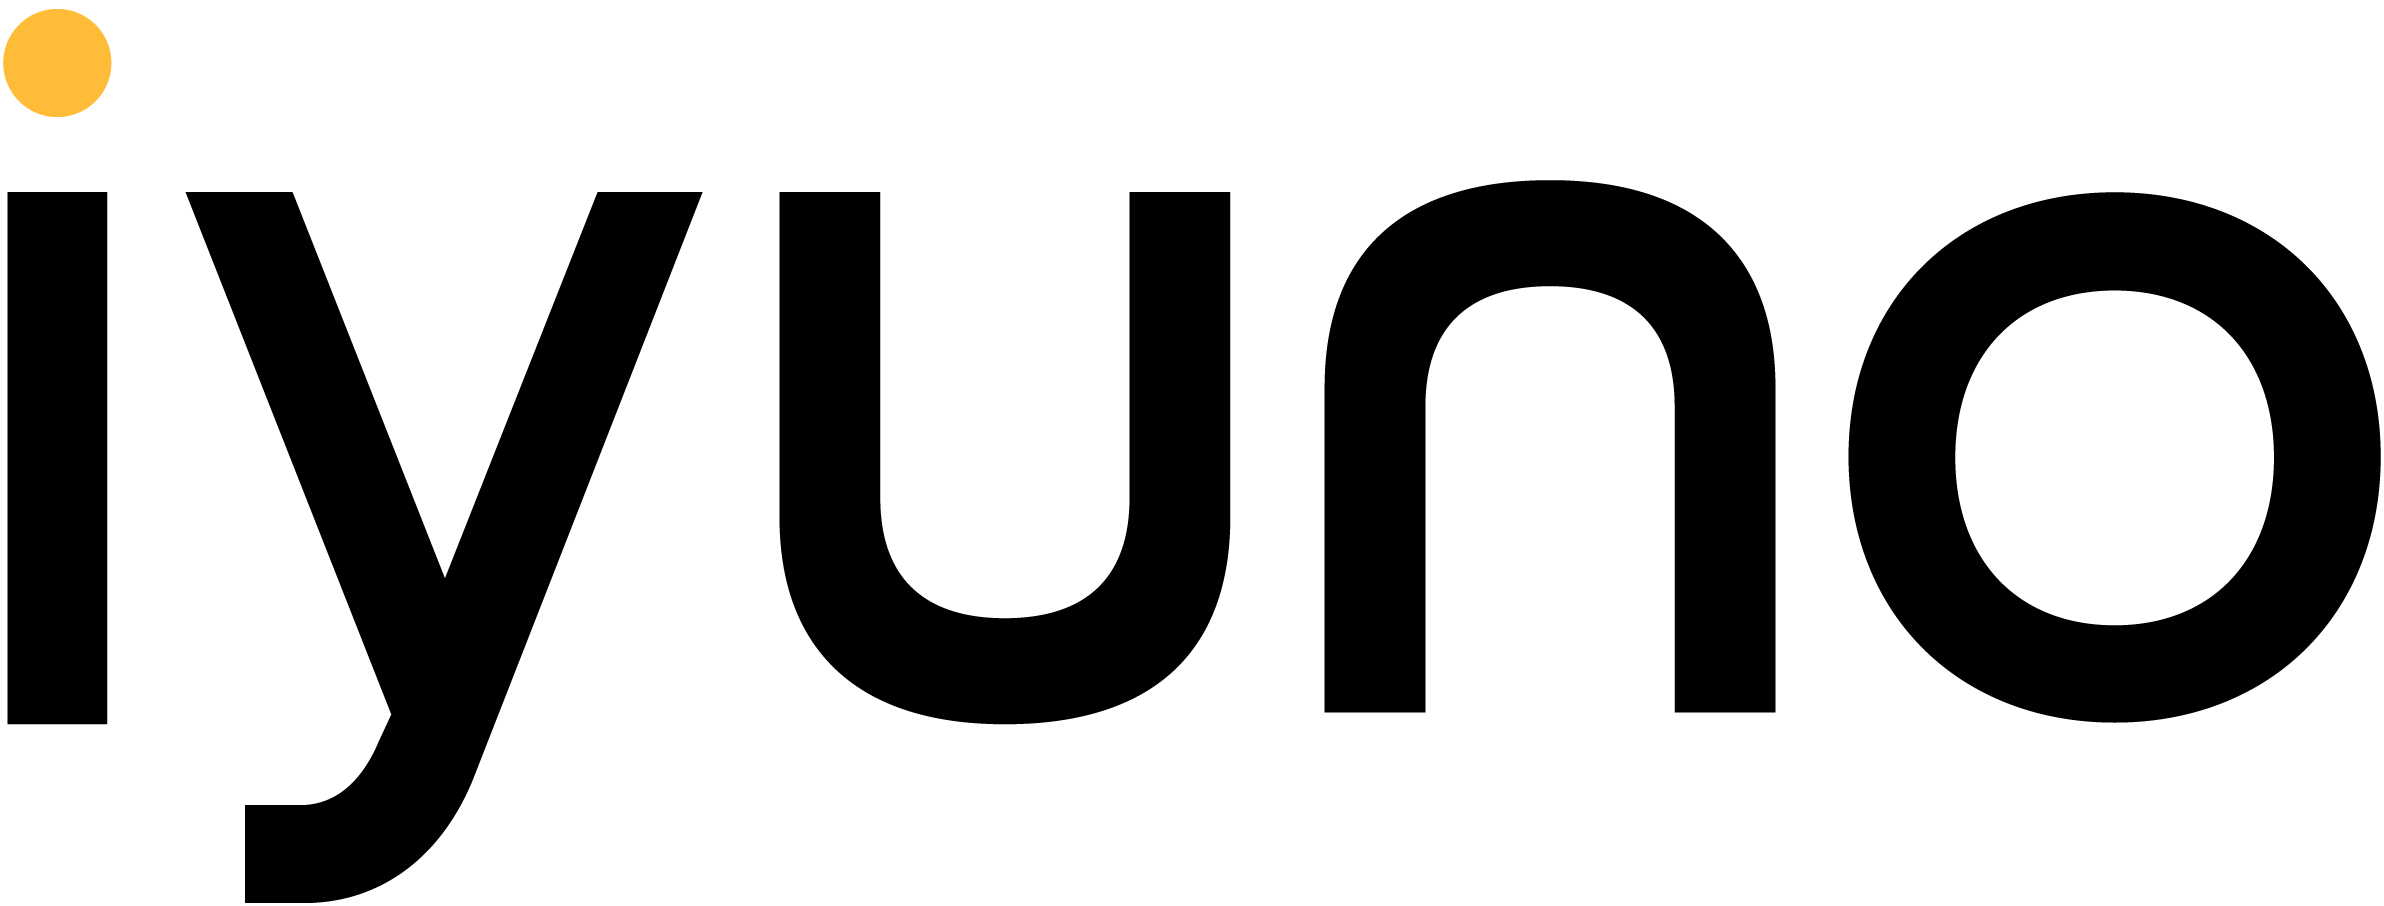 Vision Fund investment portfolio company Iyuno's logo